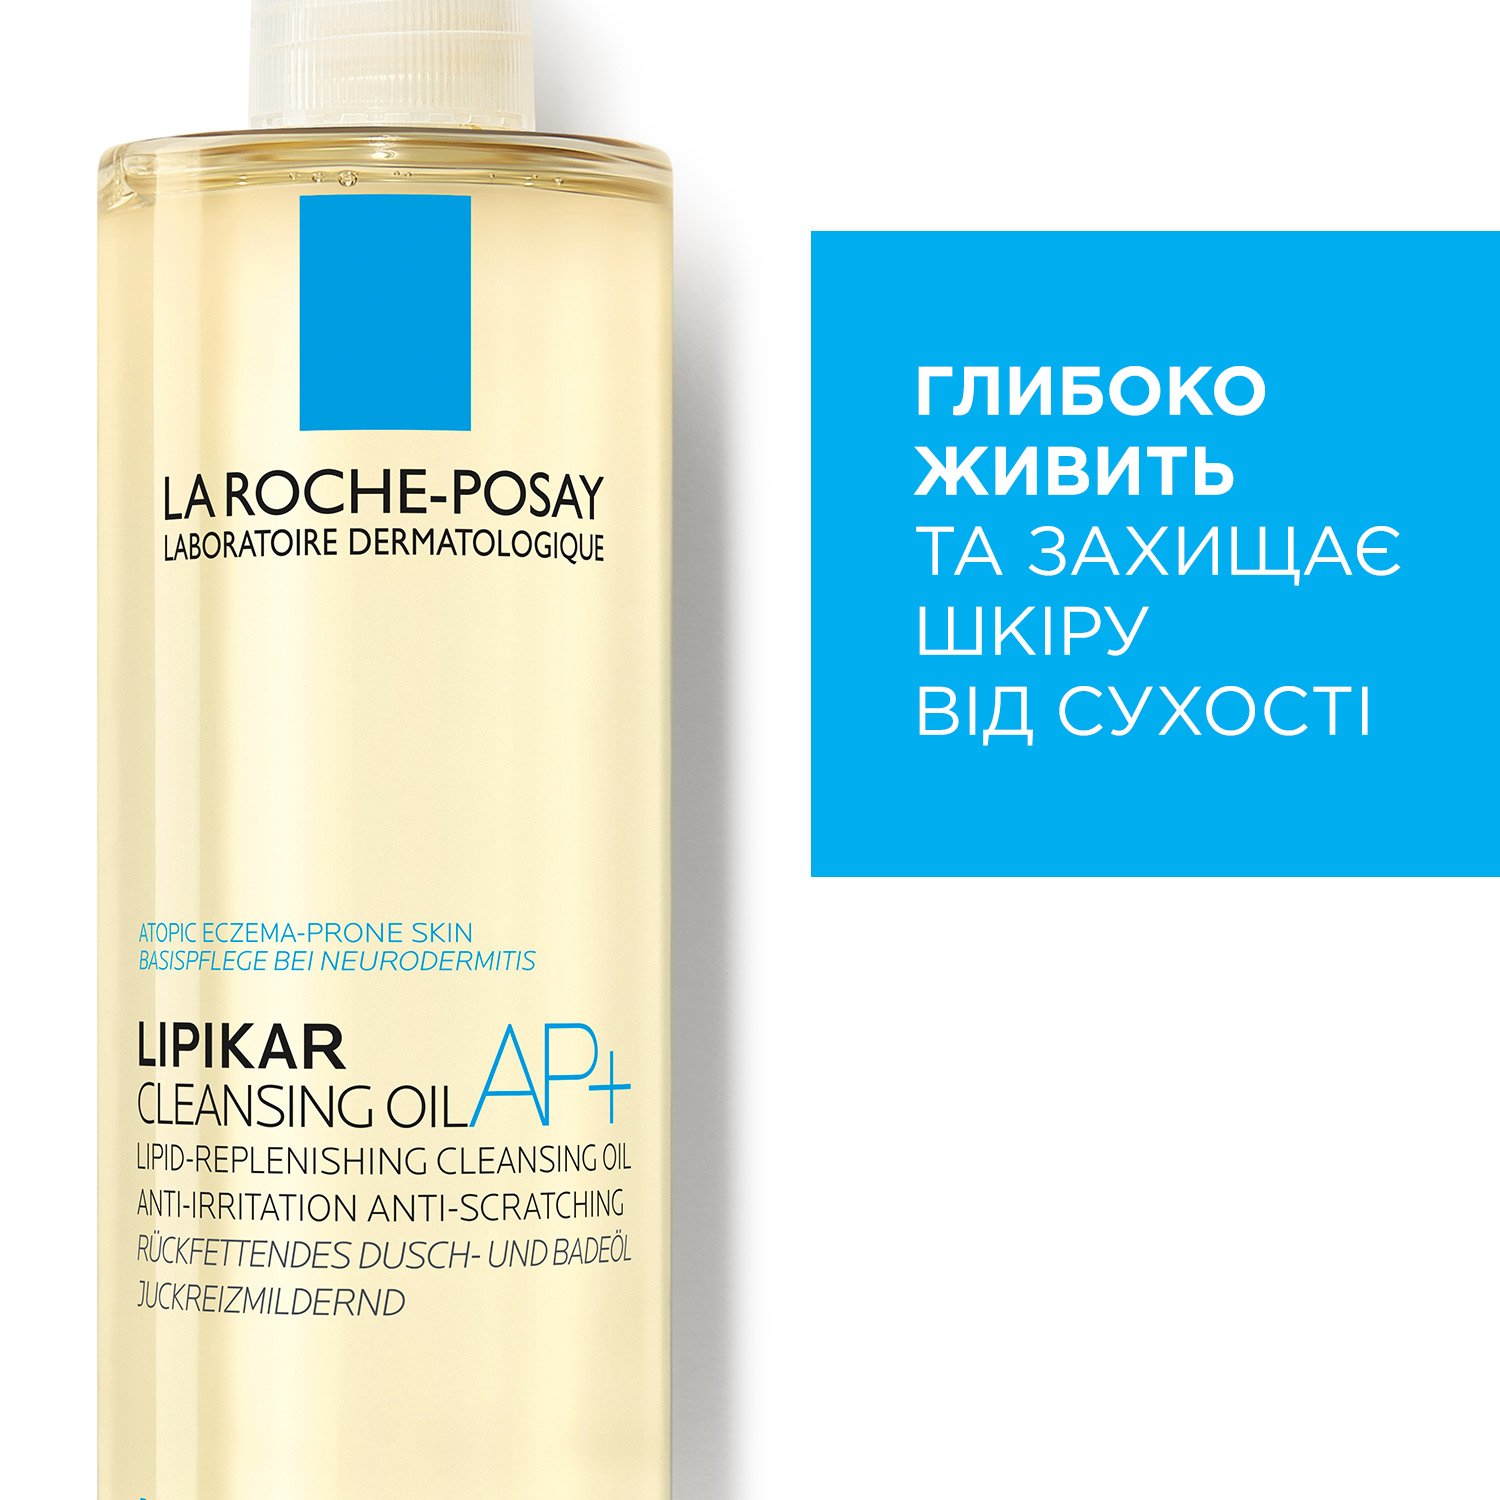 Масло для ванны La Roche-Posay Lipikar Cleansing Oil AP+ 400 мл (MB154100) - фото 5